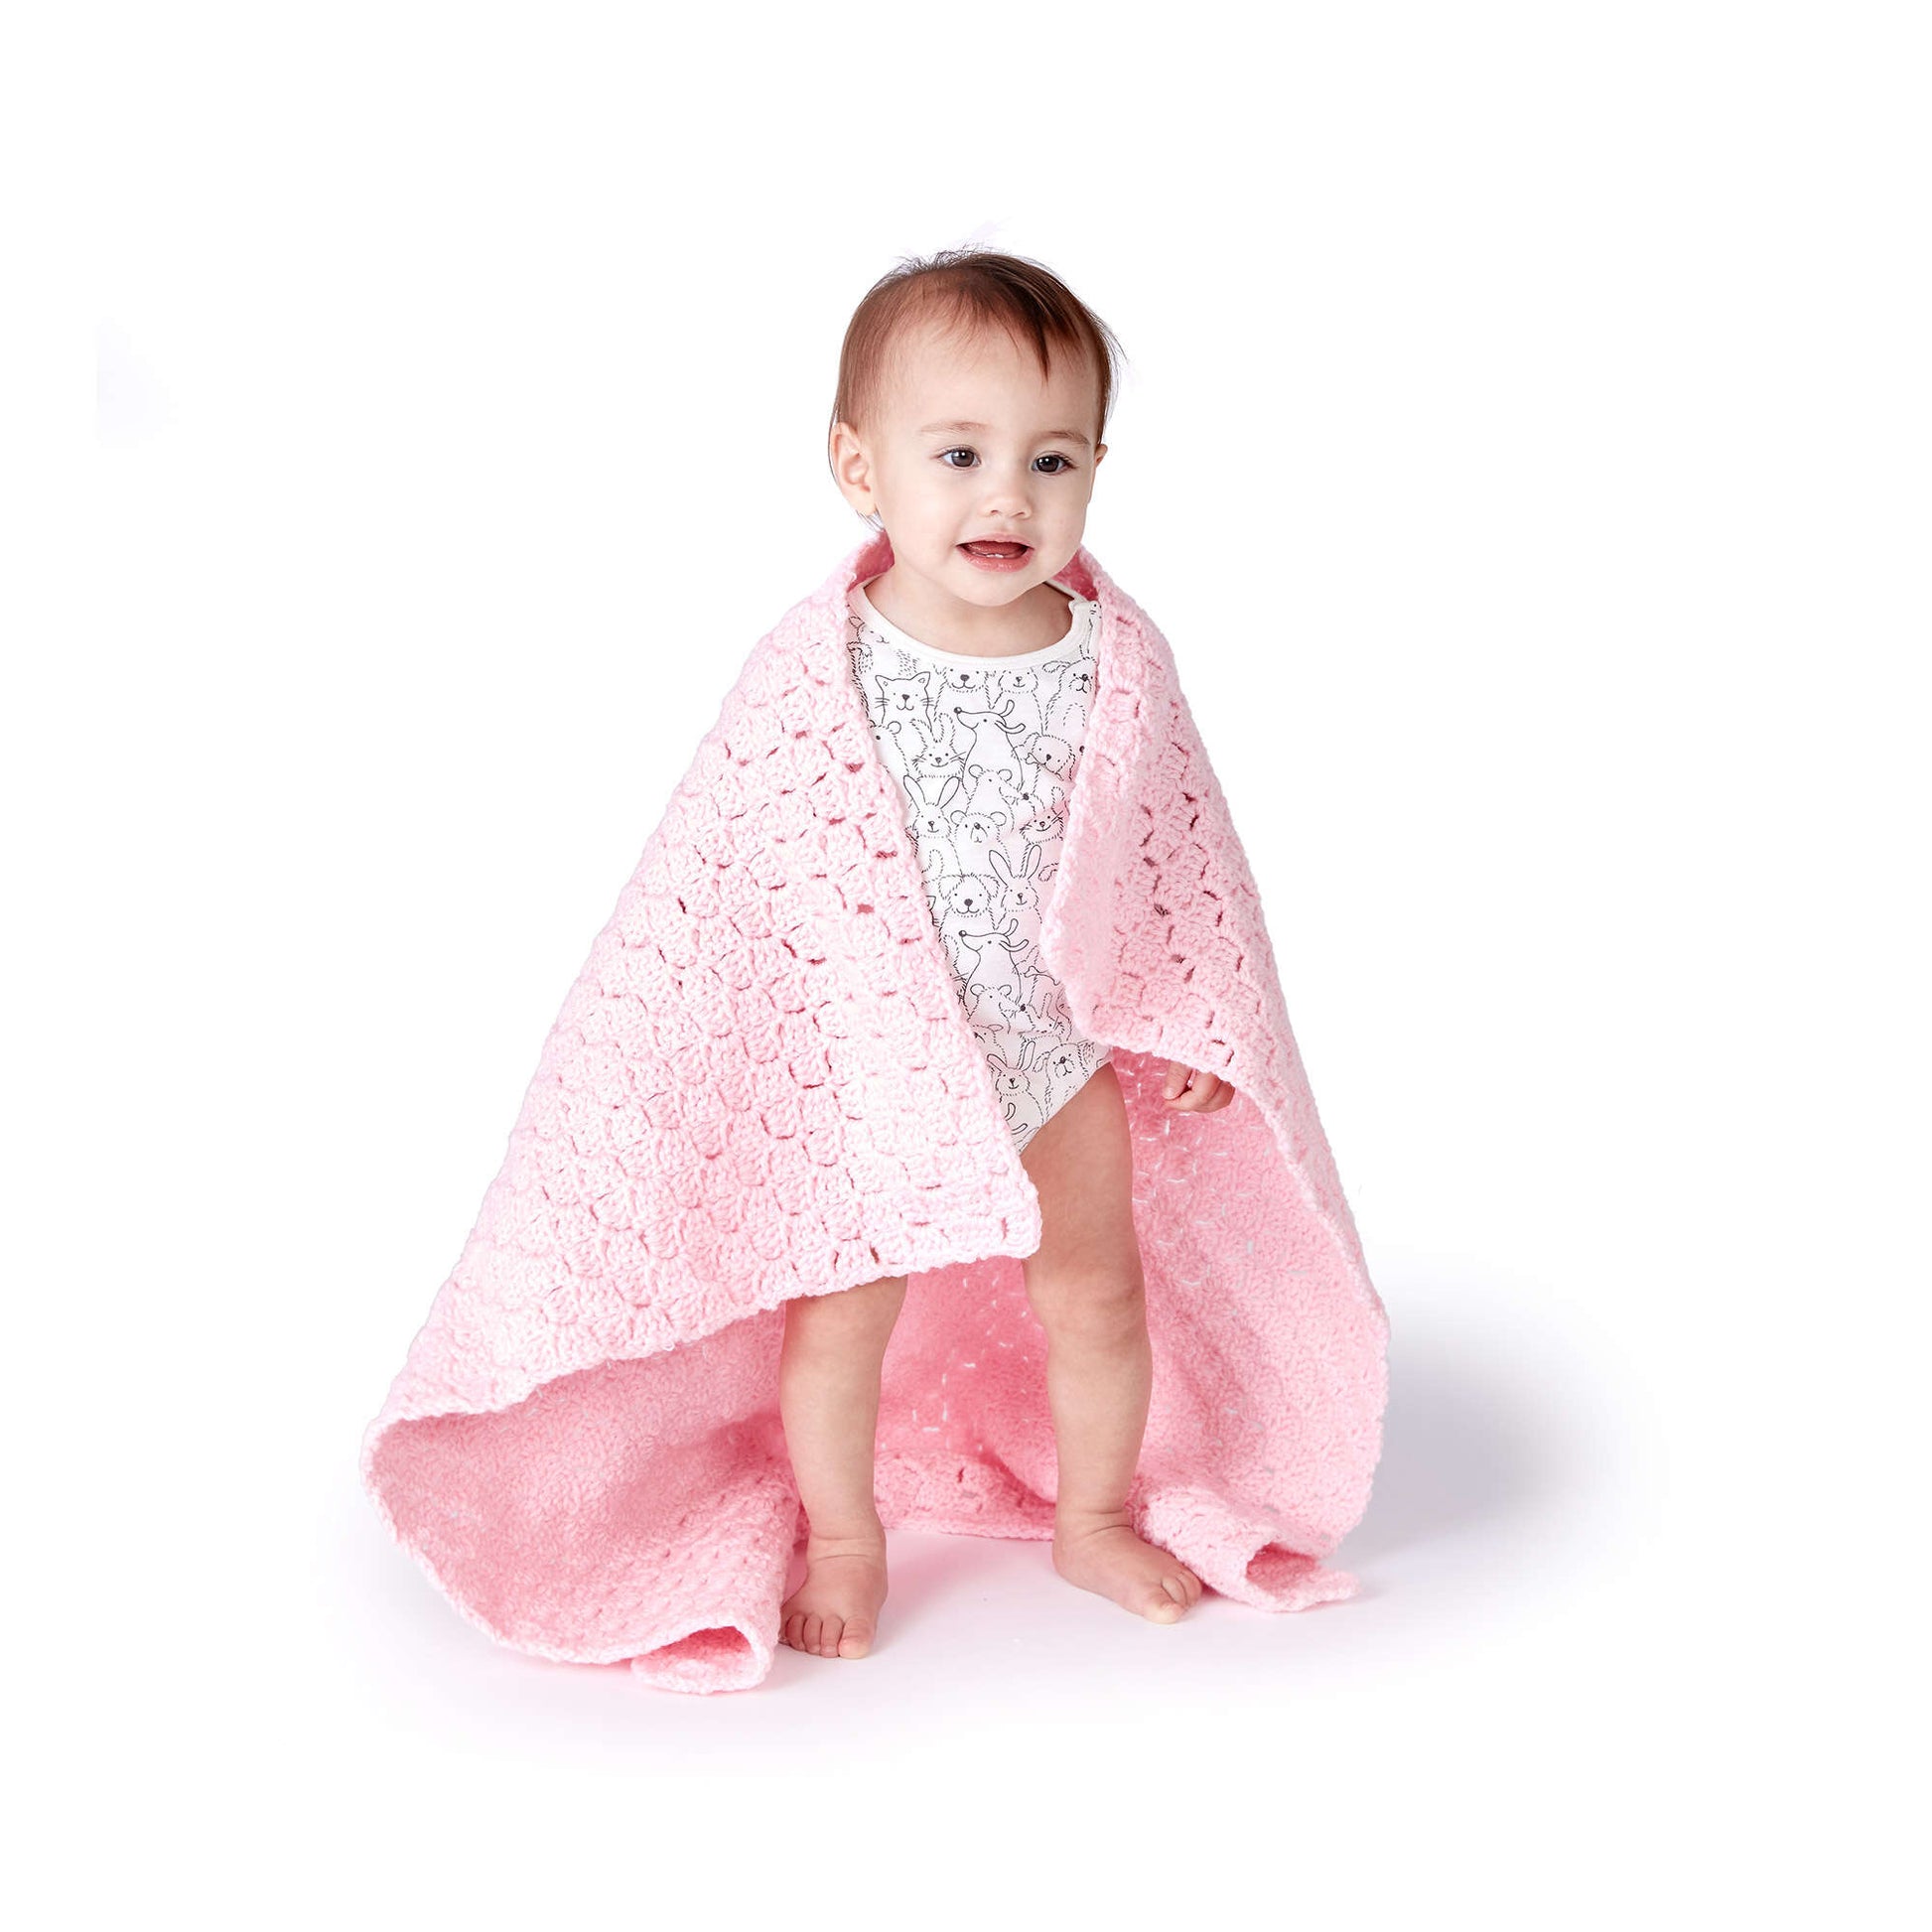 Caron Baby Blocks Crochet Blanket Single Size